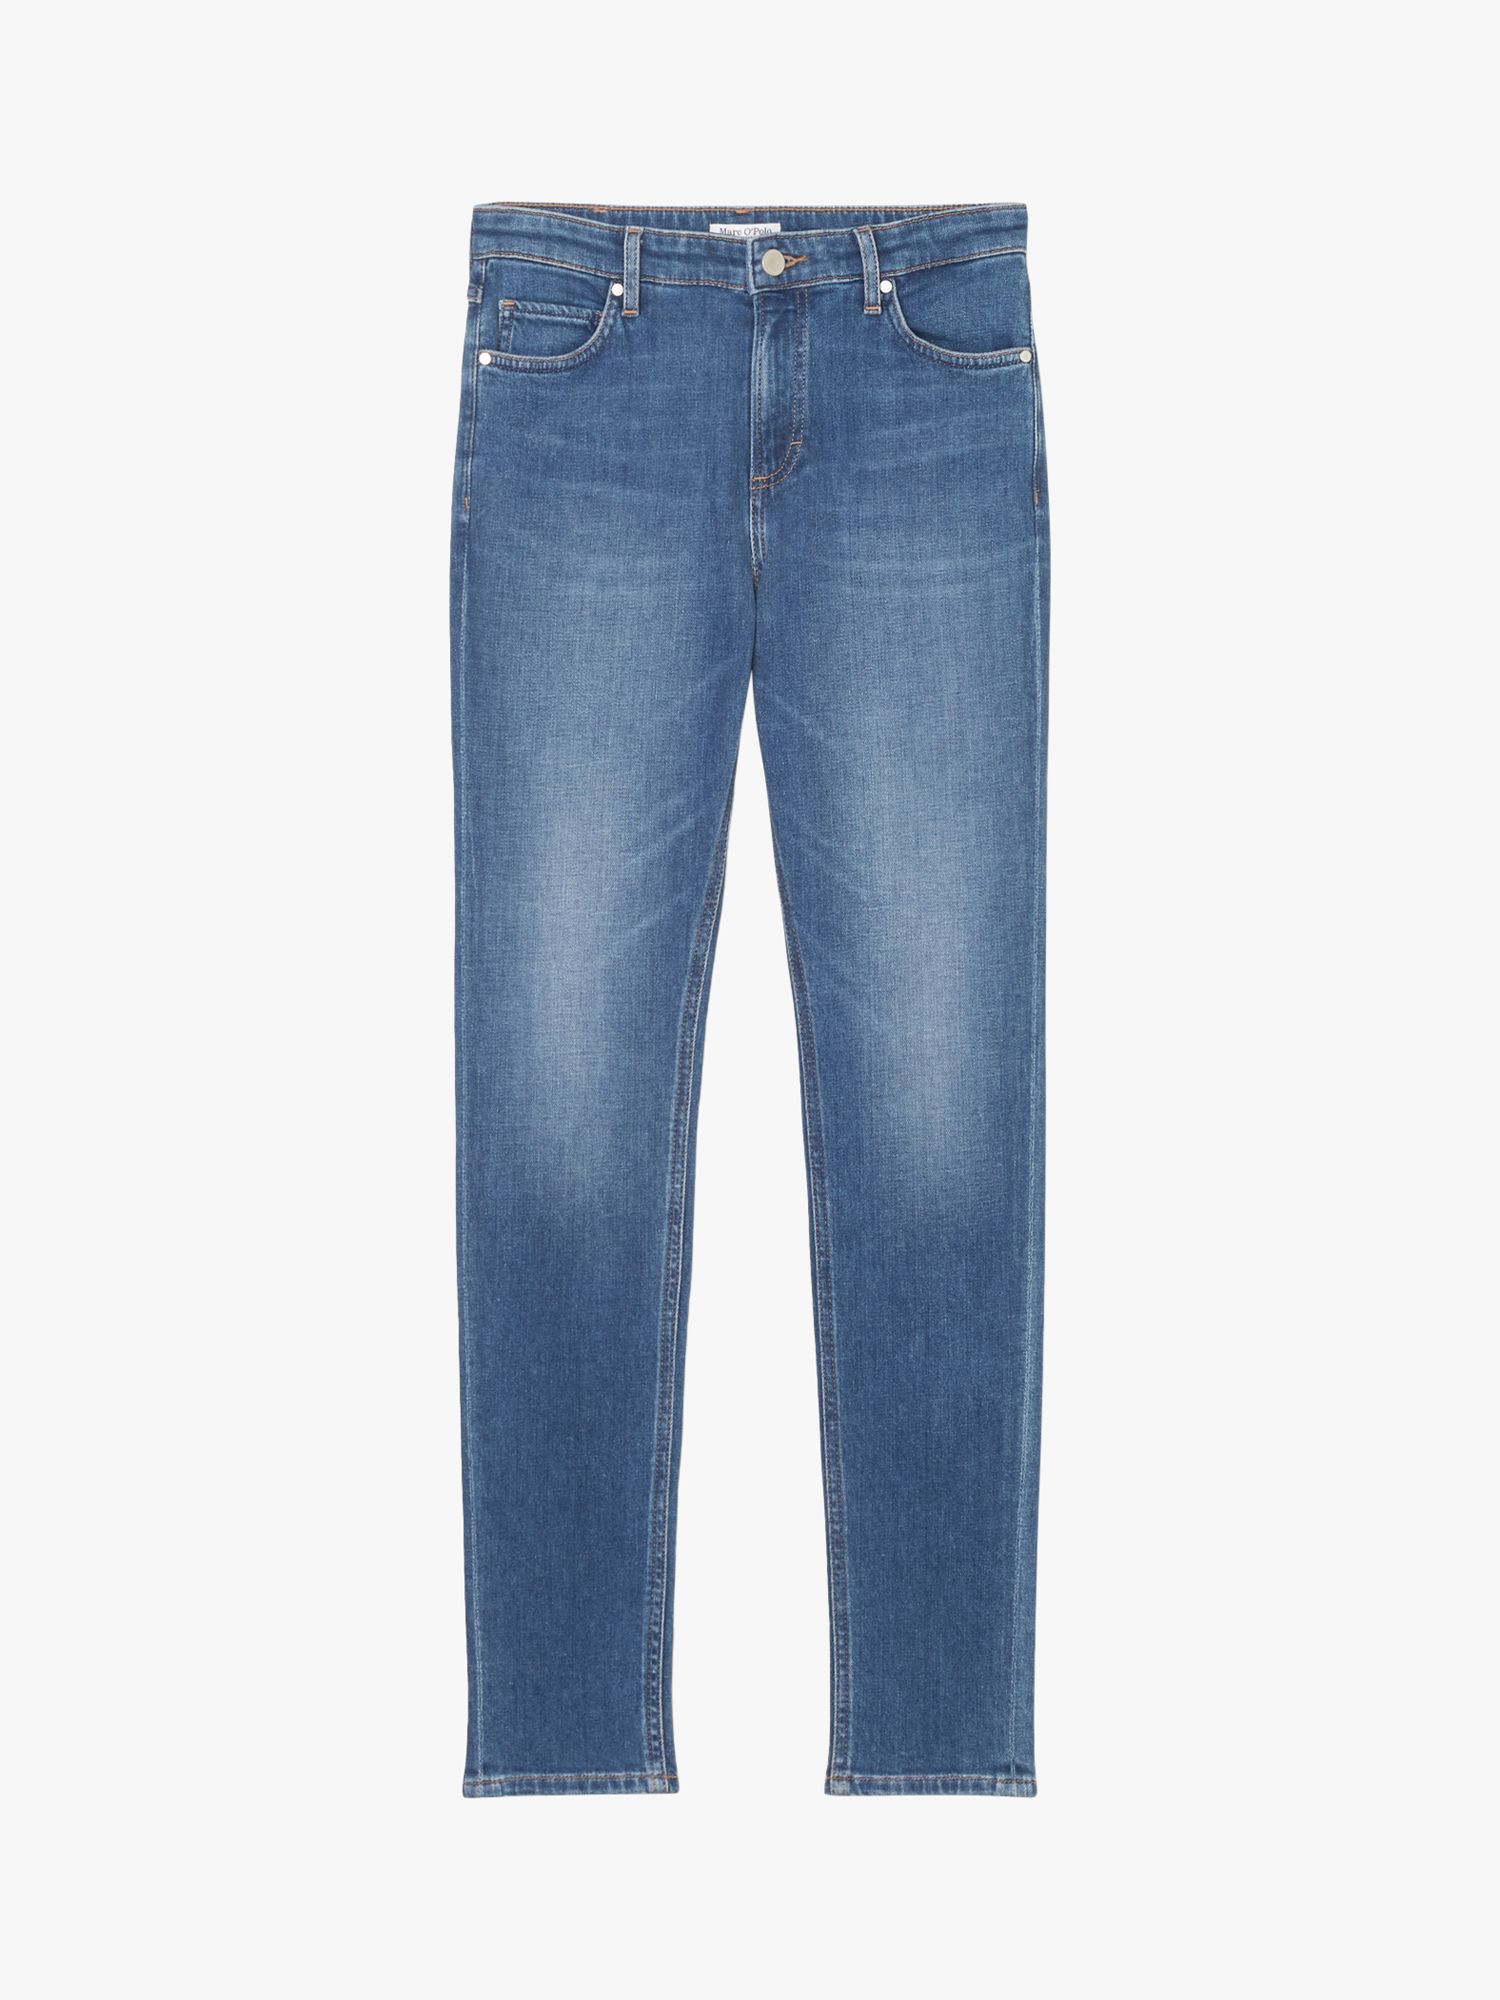 Marc O'Polo Denim High Waist Skinny Jeans, Washed Blue, 32L